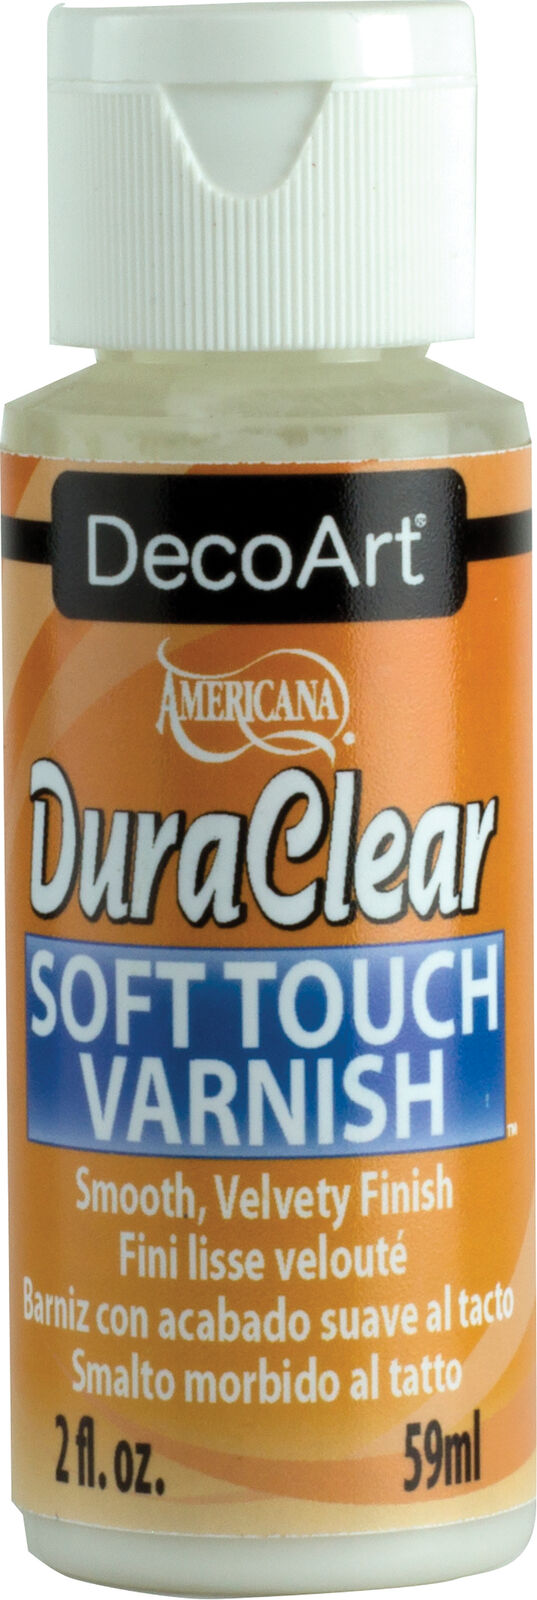 Decoart 2oz Duraclear Soft Touch Varnish